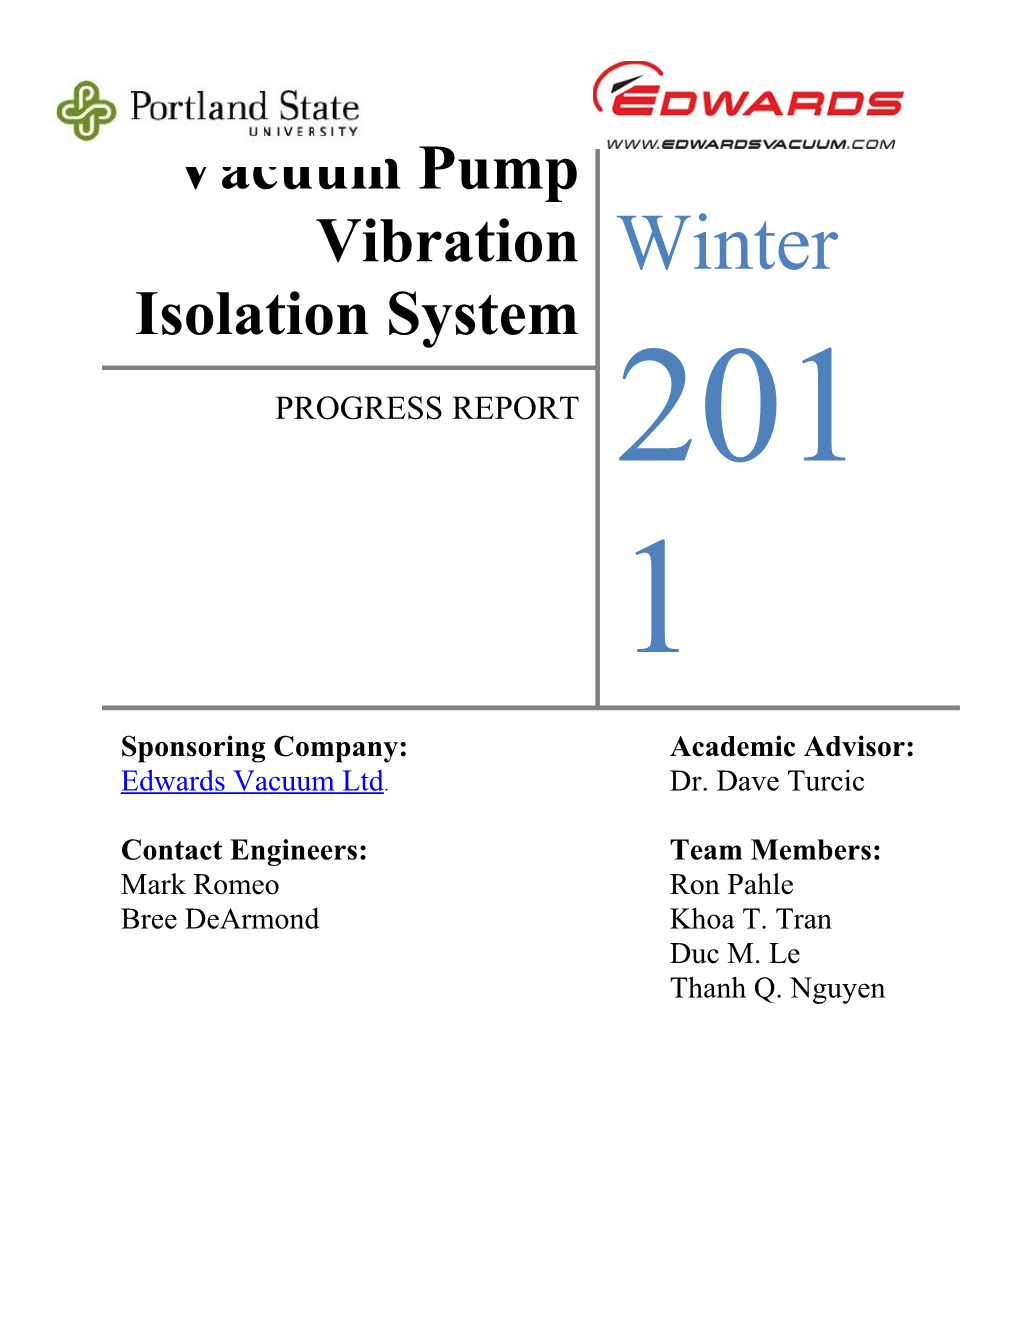 Vacuum Pump Vibration Isolation System Progress Report